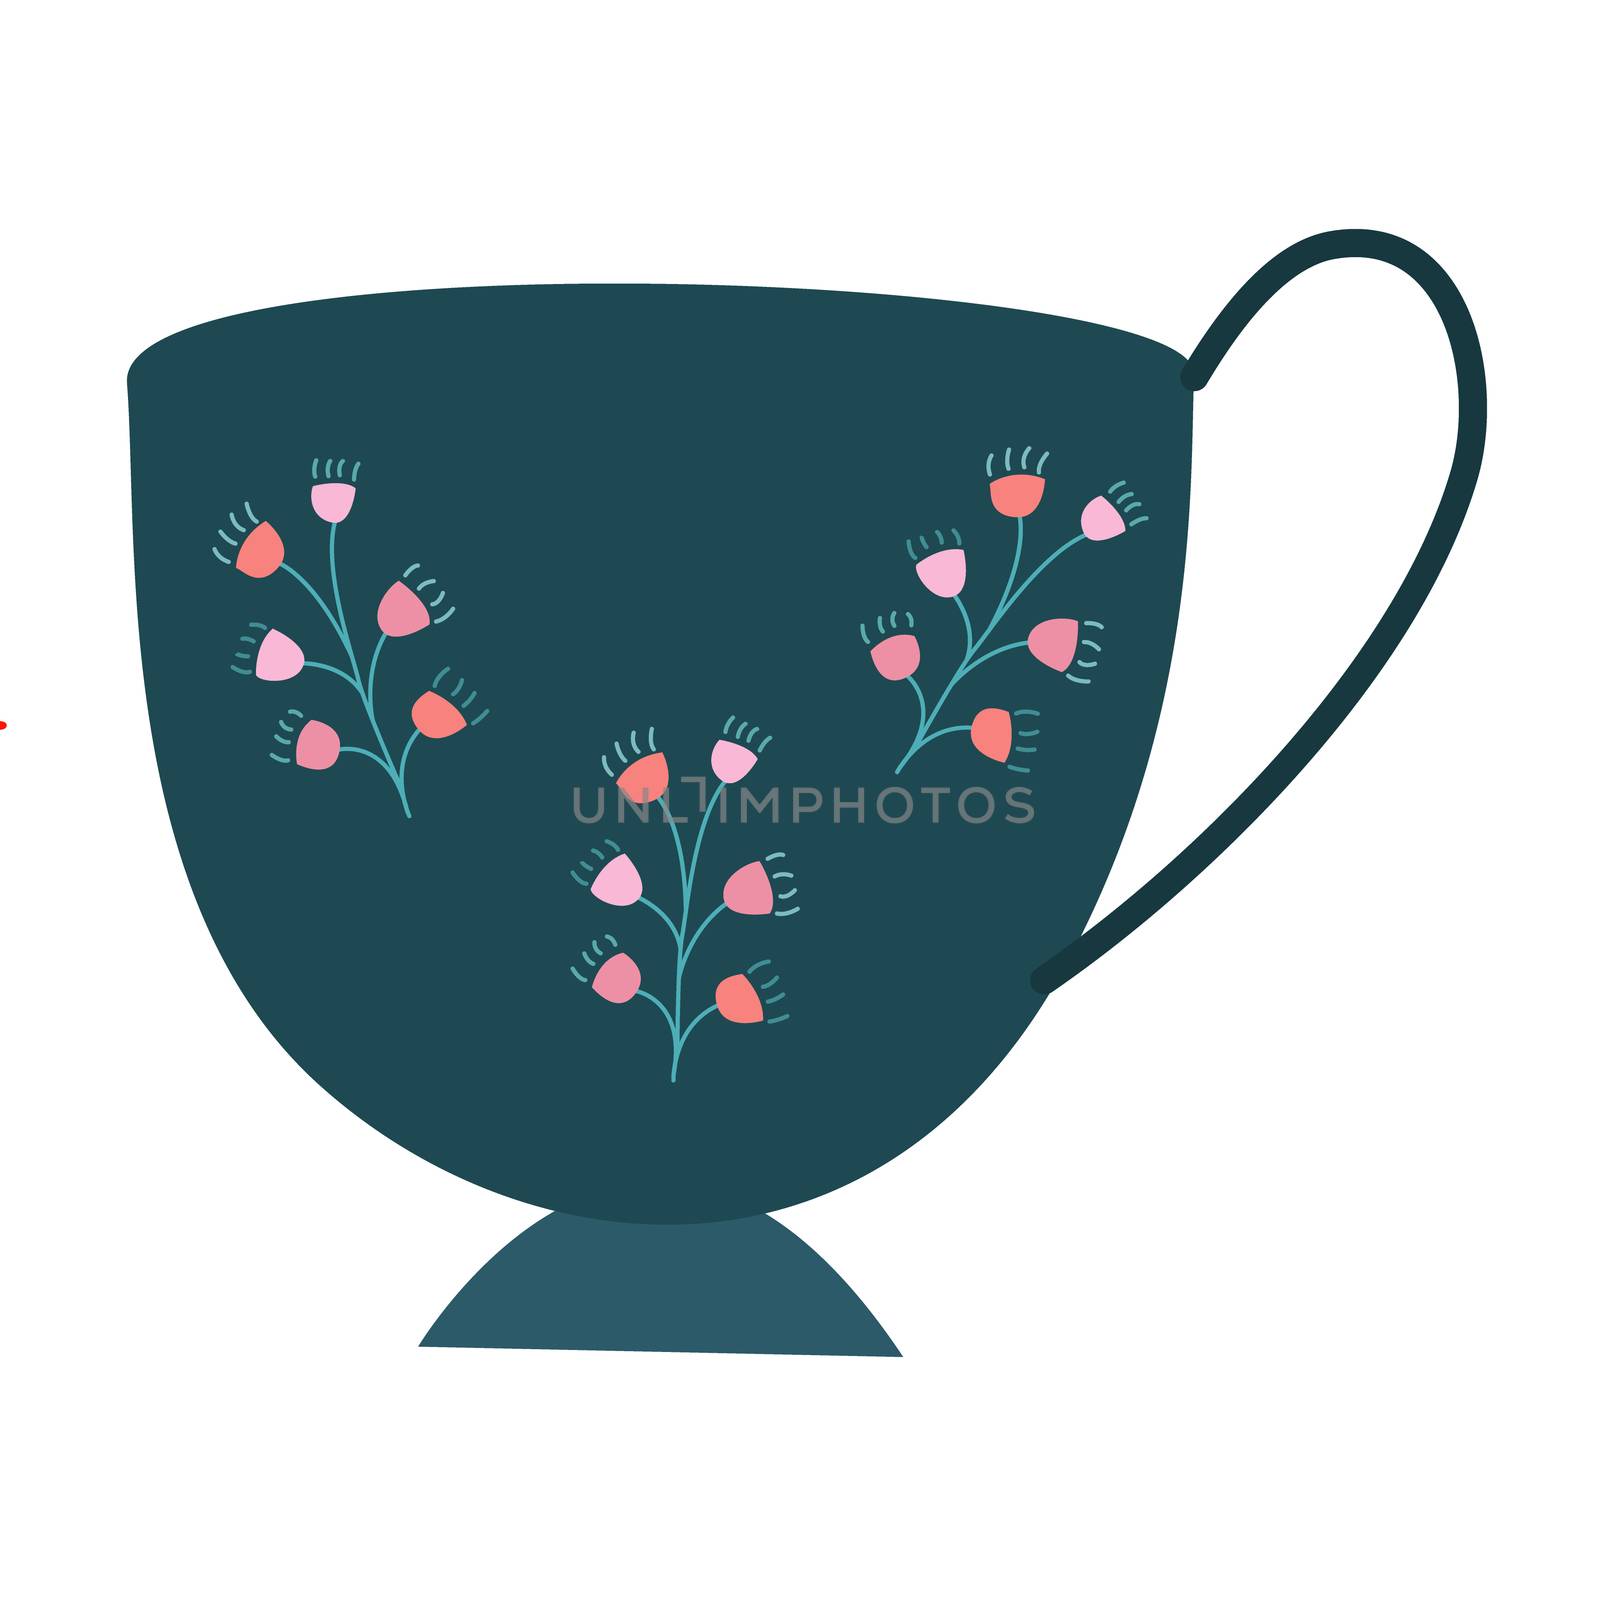 Teal color vintage cup with simple floral decor. by Nata_Prando